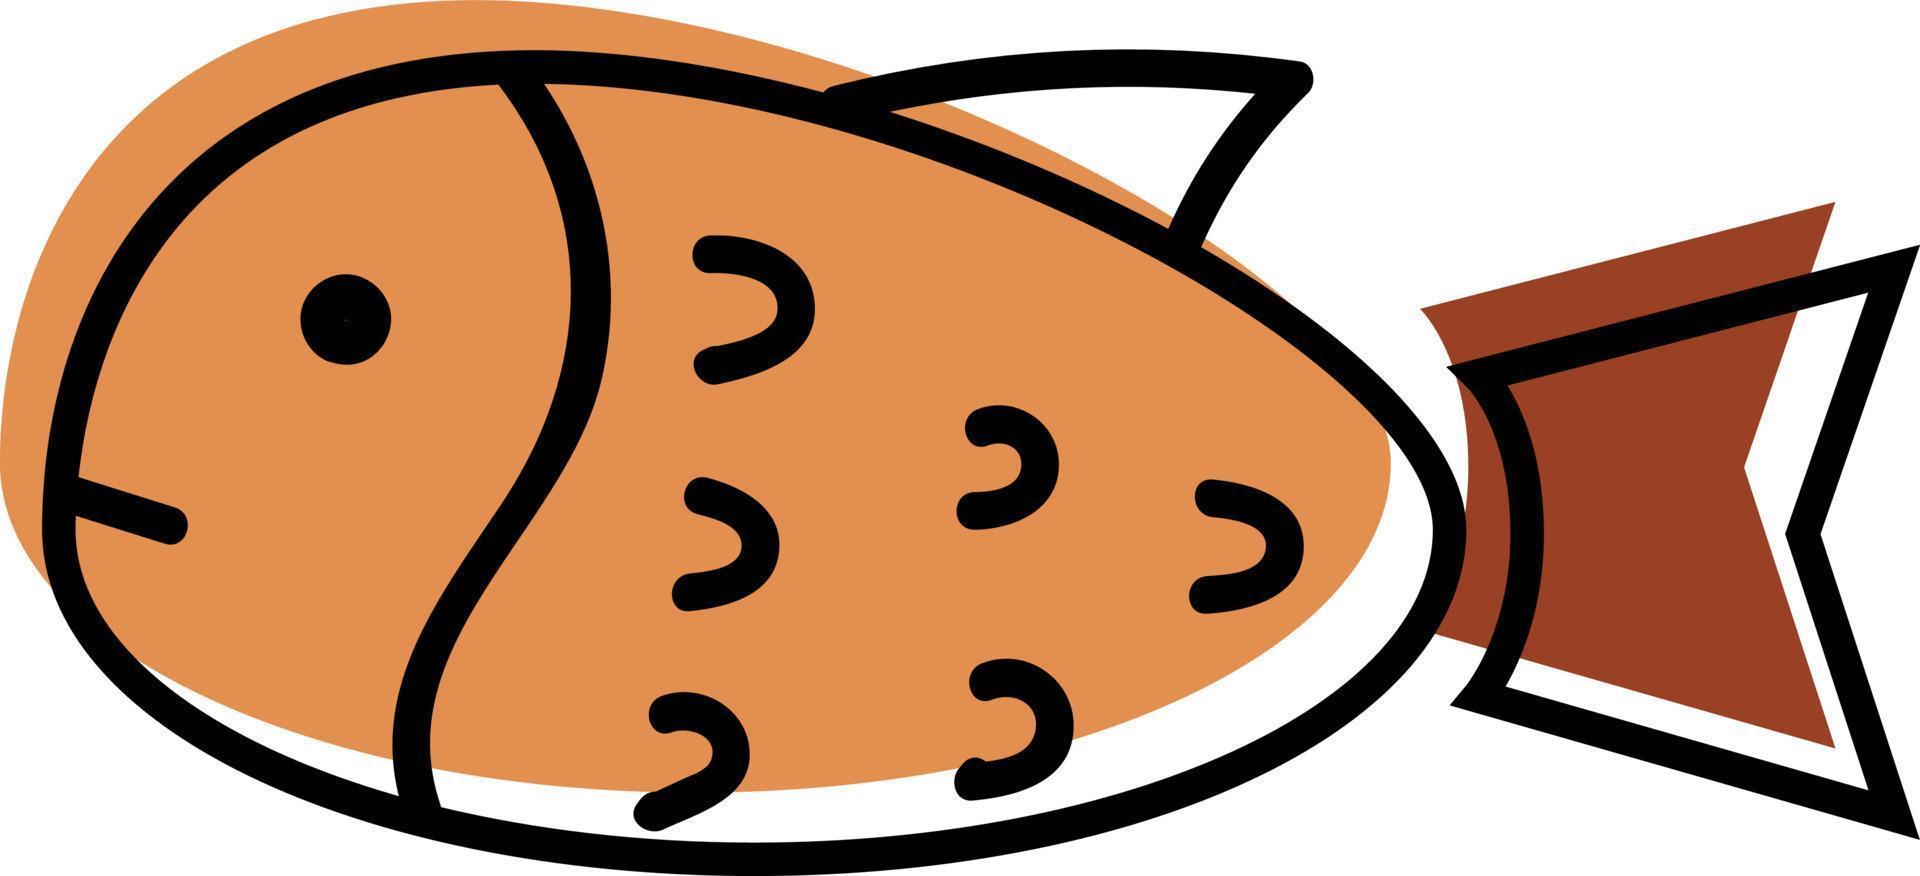 mahi mahi pesce, icona illustrazione, vettore su bianca sfondo